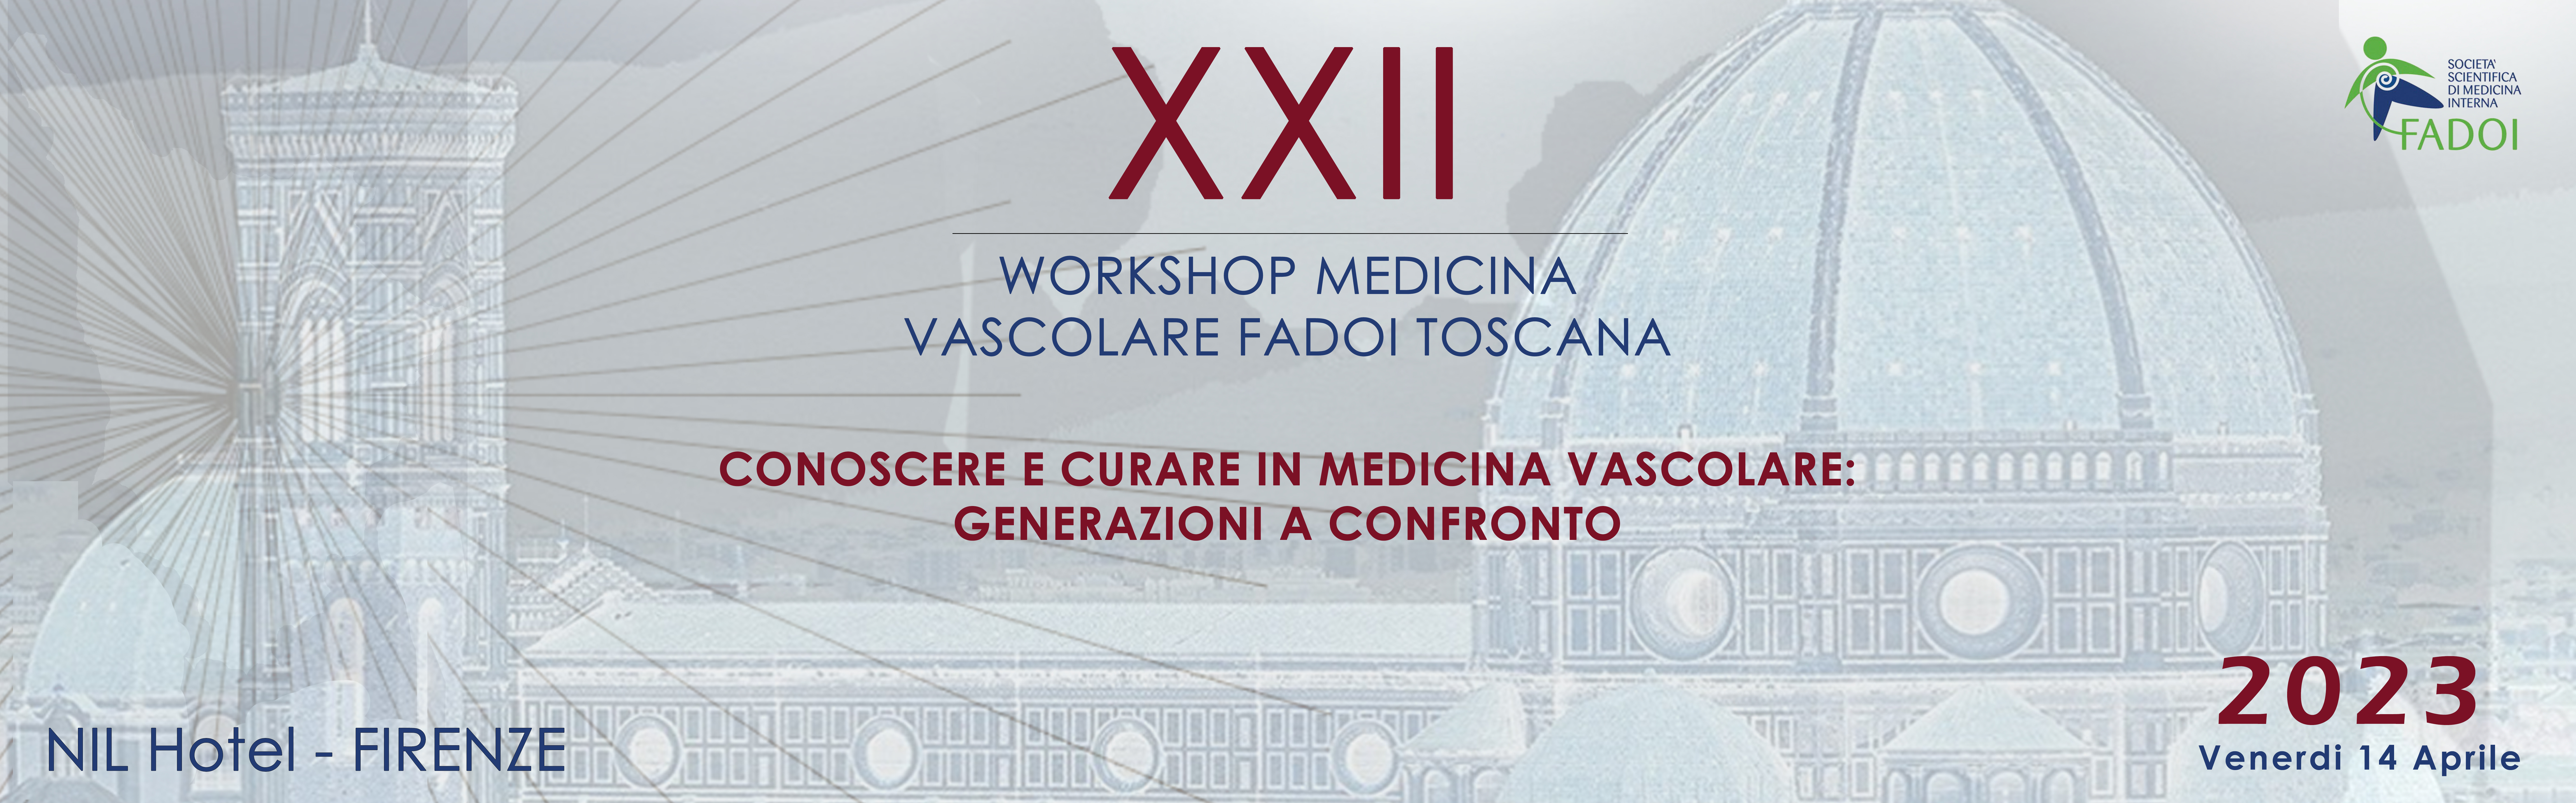 XXII Workshop di Medicina Vascolare FADOI Toscana